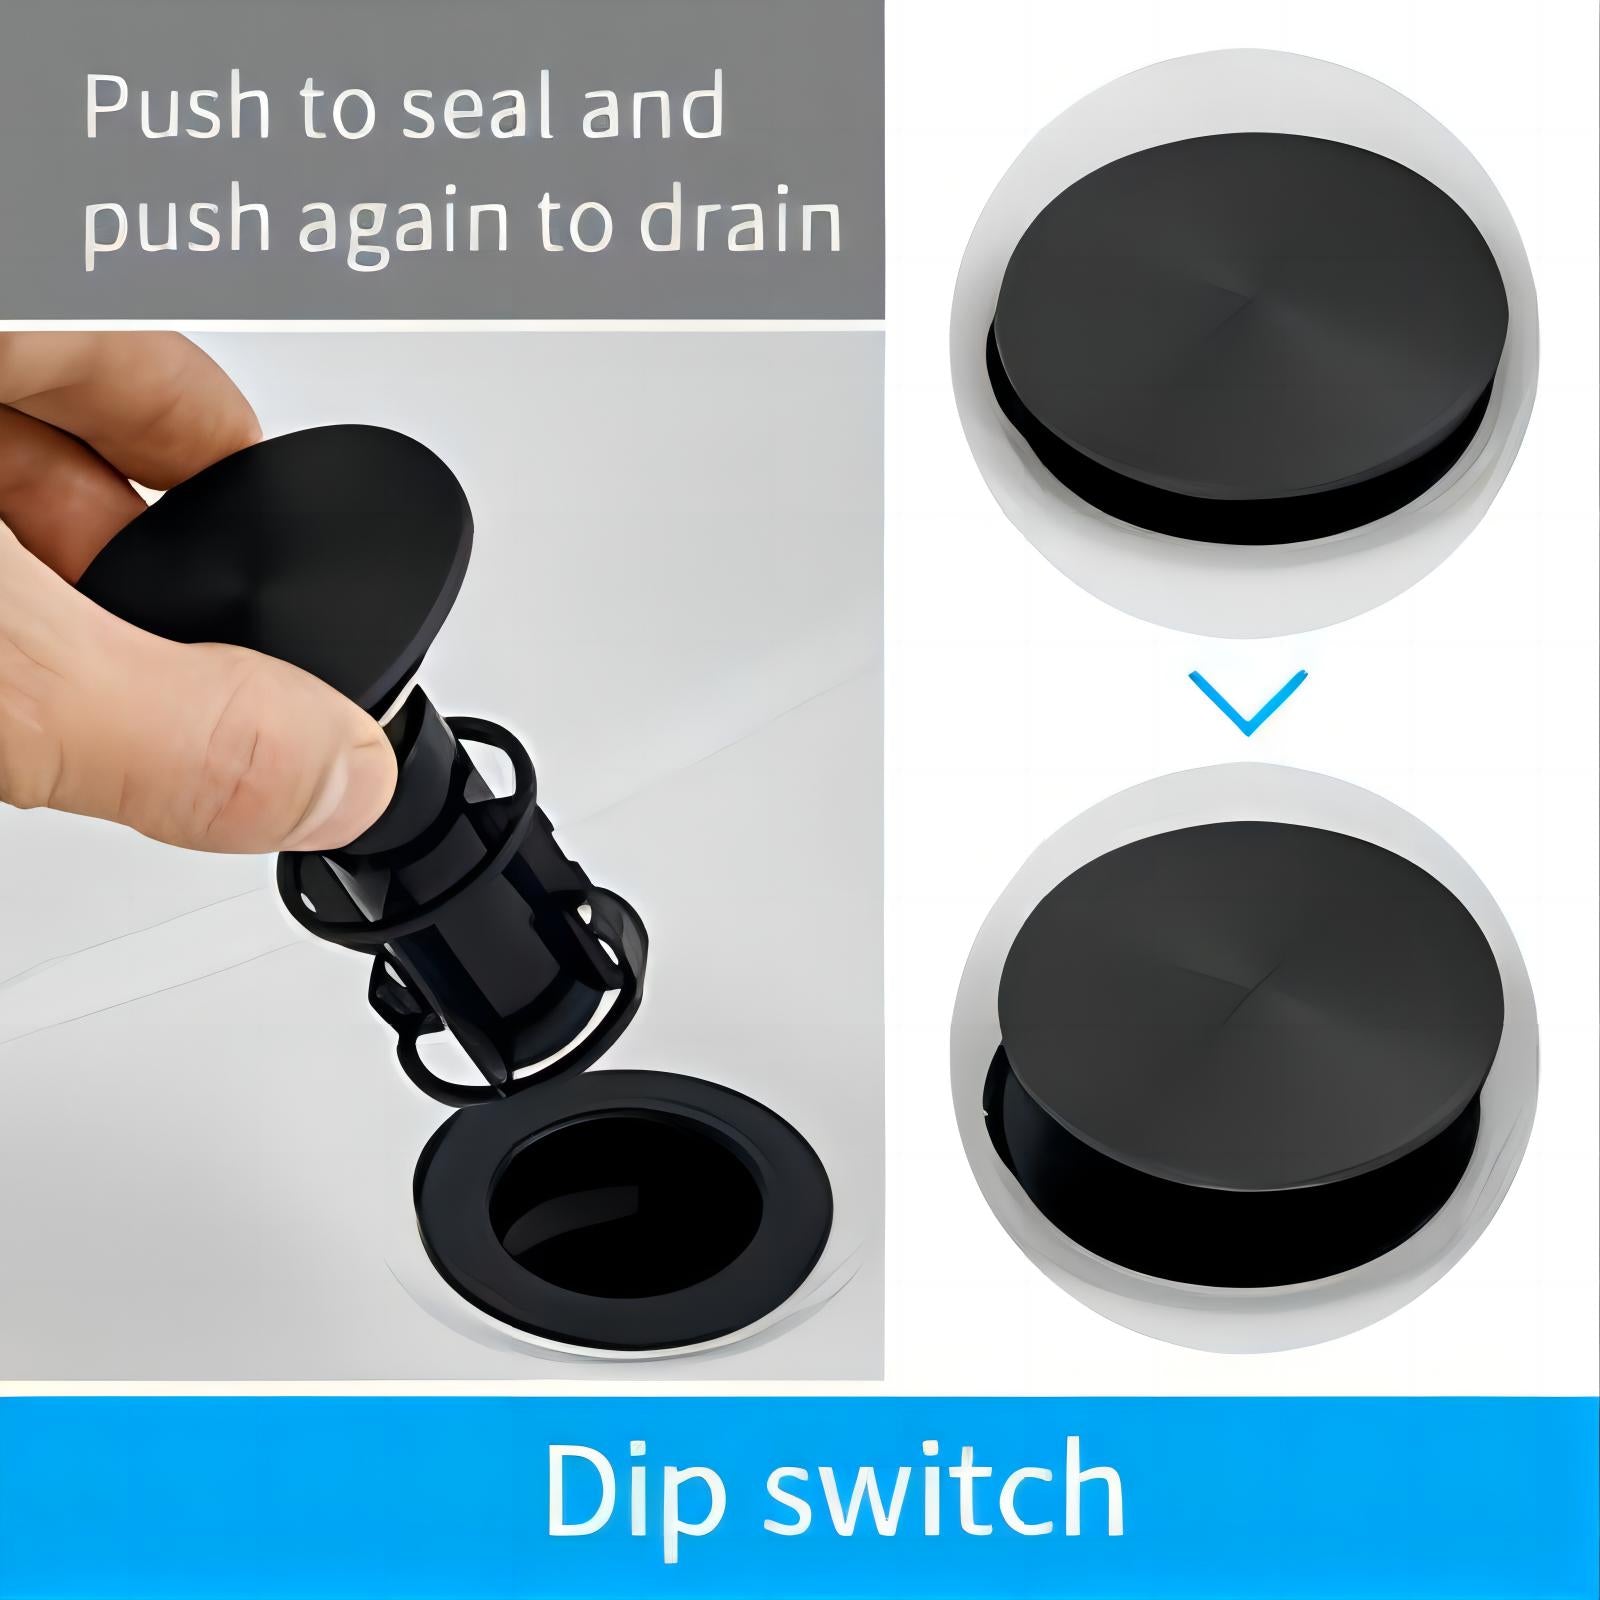 Dip switch